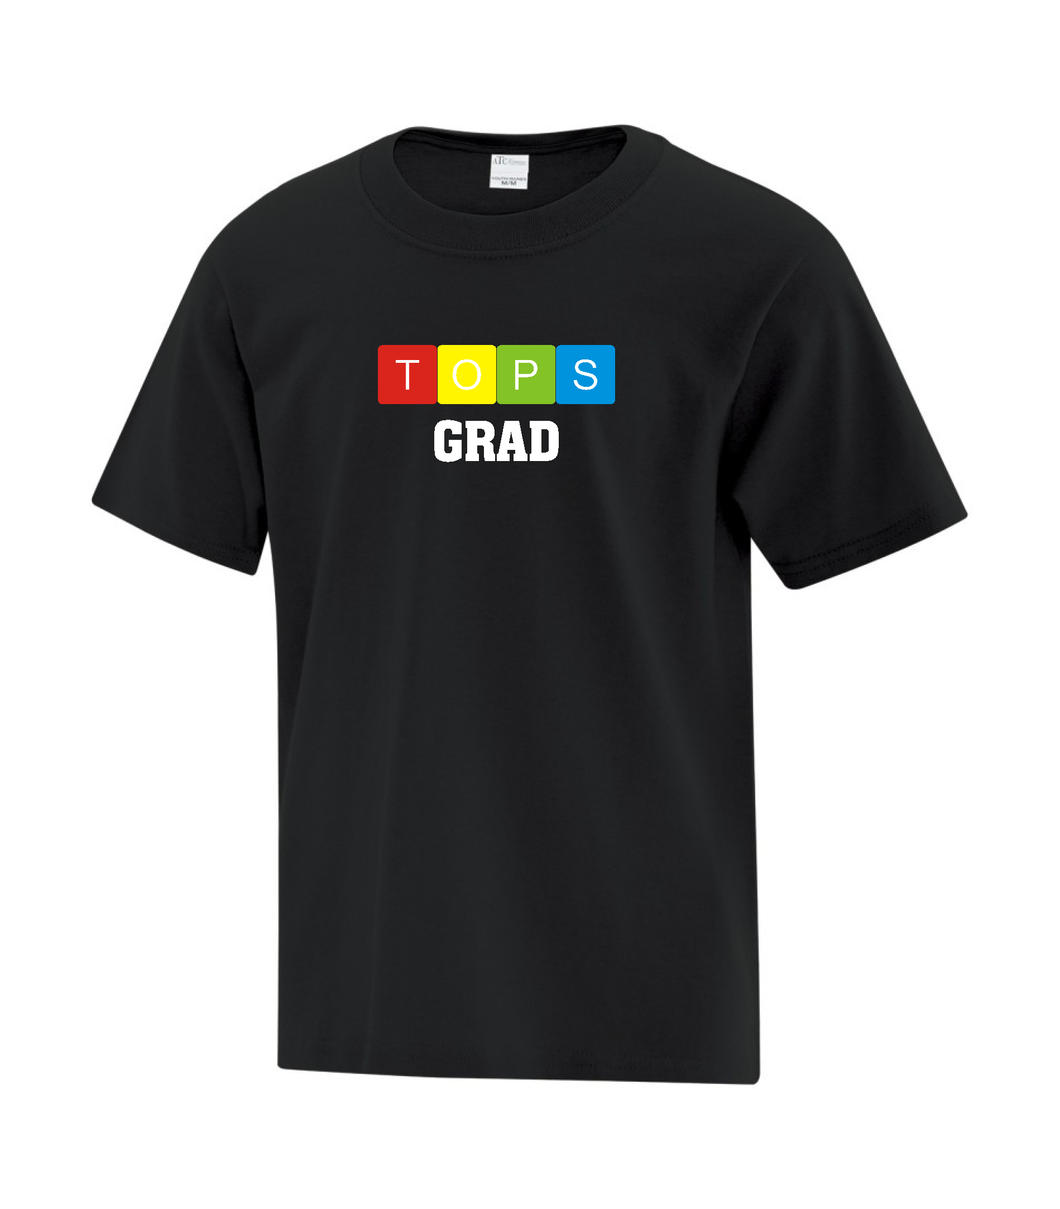 Youth T-Shirt - GRAD with TOPS blocks logo